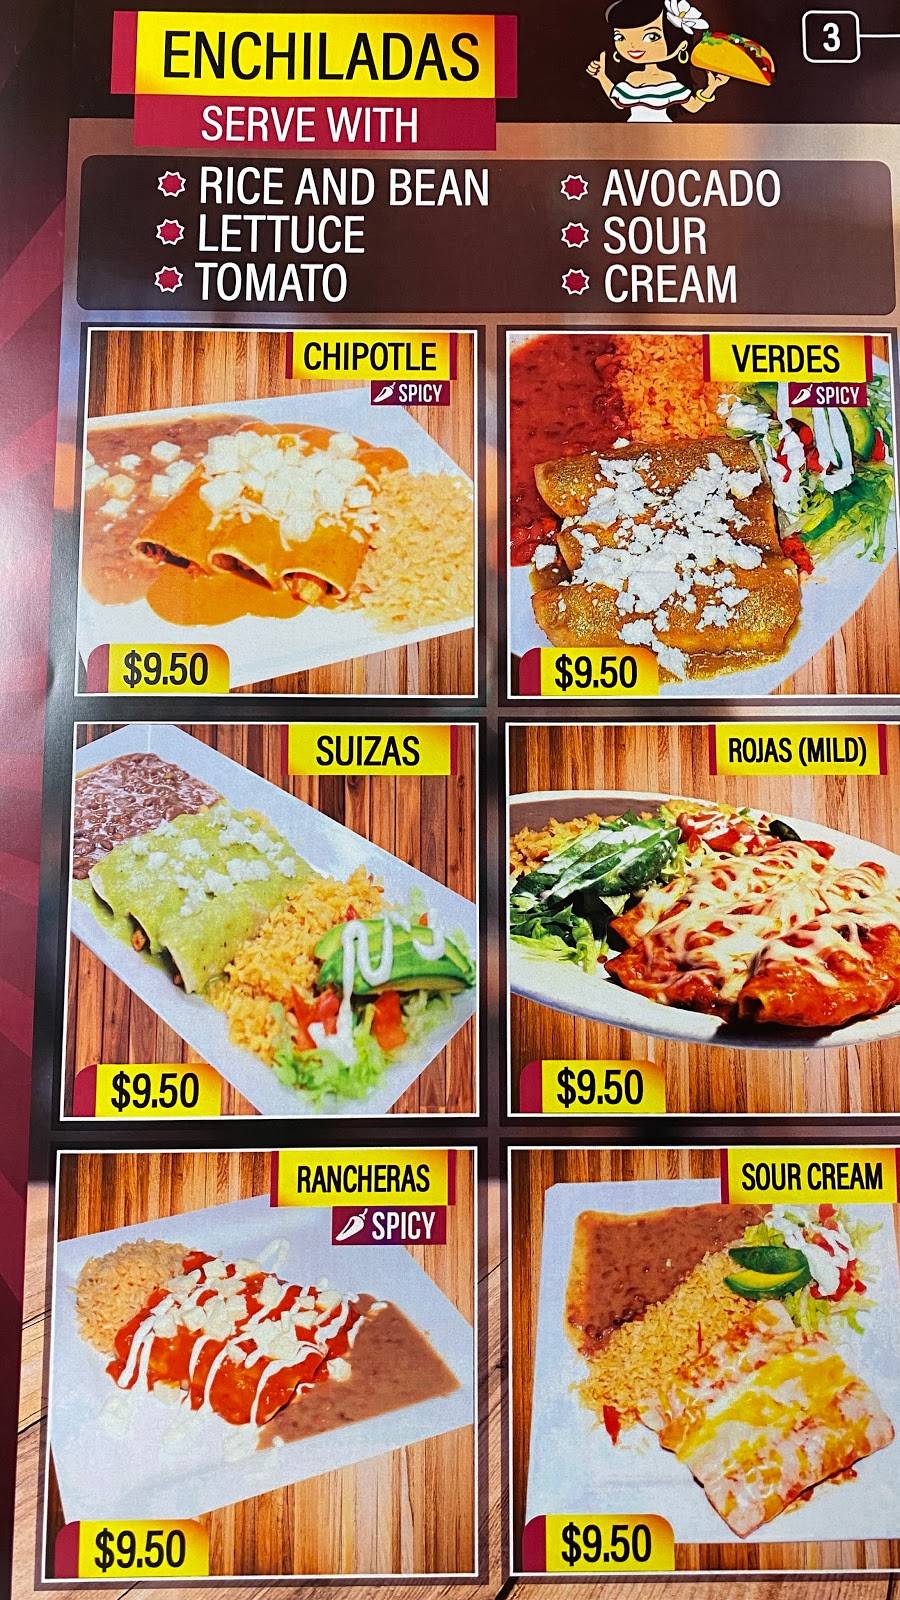 La Tropicana Tacos Y Mas | 3903 S Western Ave, Oklahoma City, OK 73109, USA | Phone: (405) 634-8231